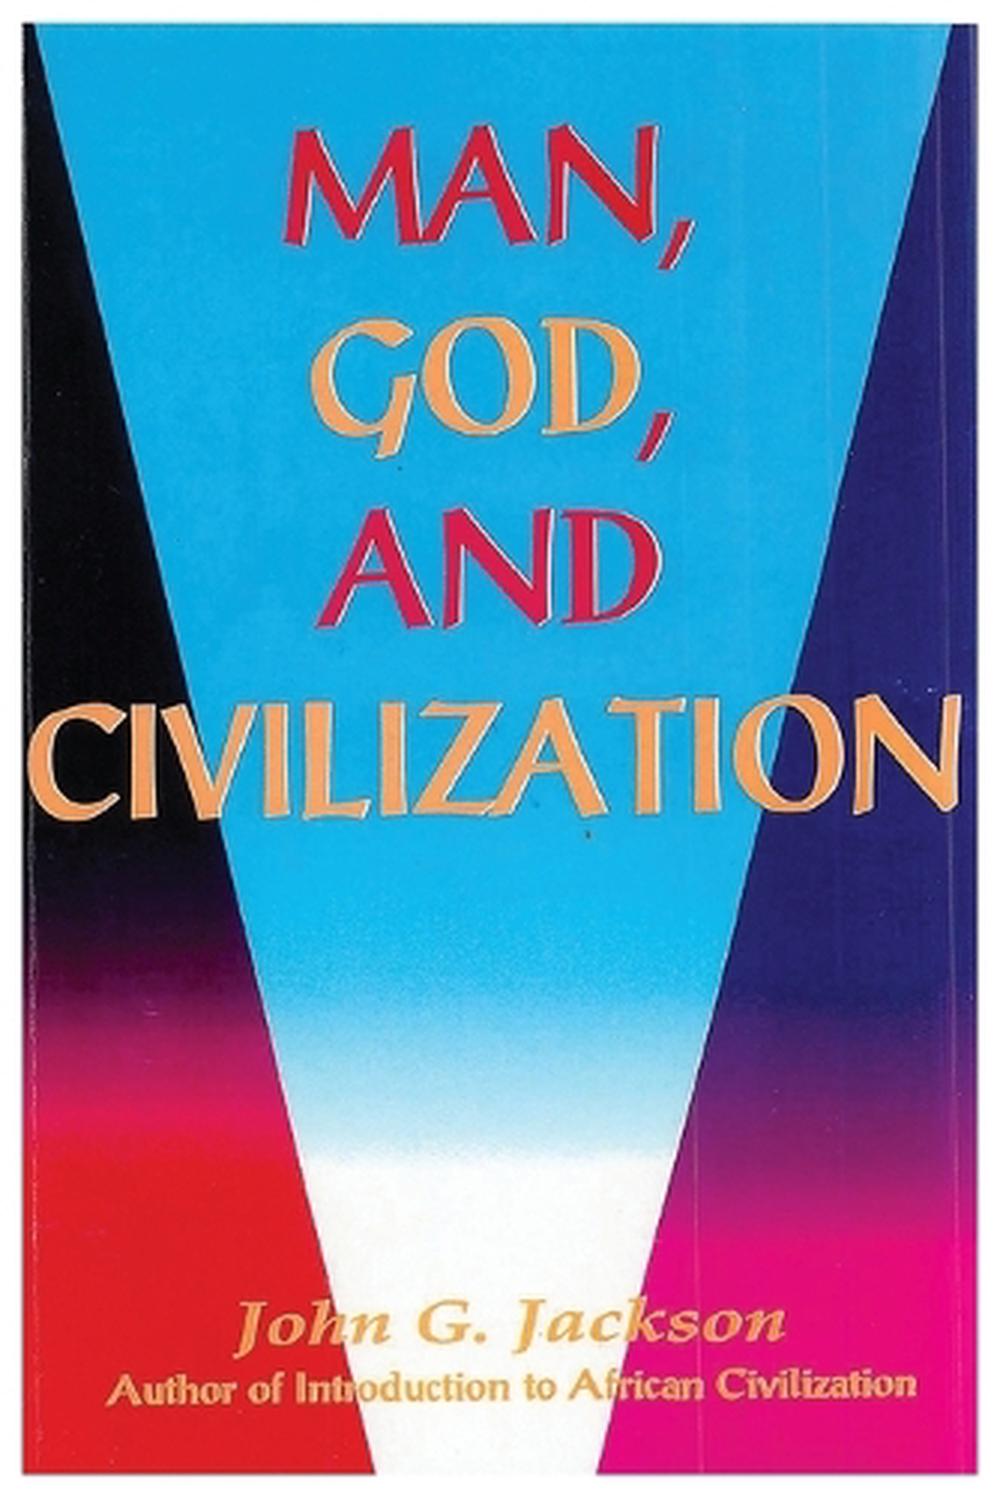 Man, God, and Civilization by John G. Jackson (English) Paperback Book Free Ship 9781930097179